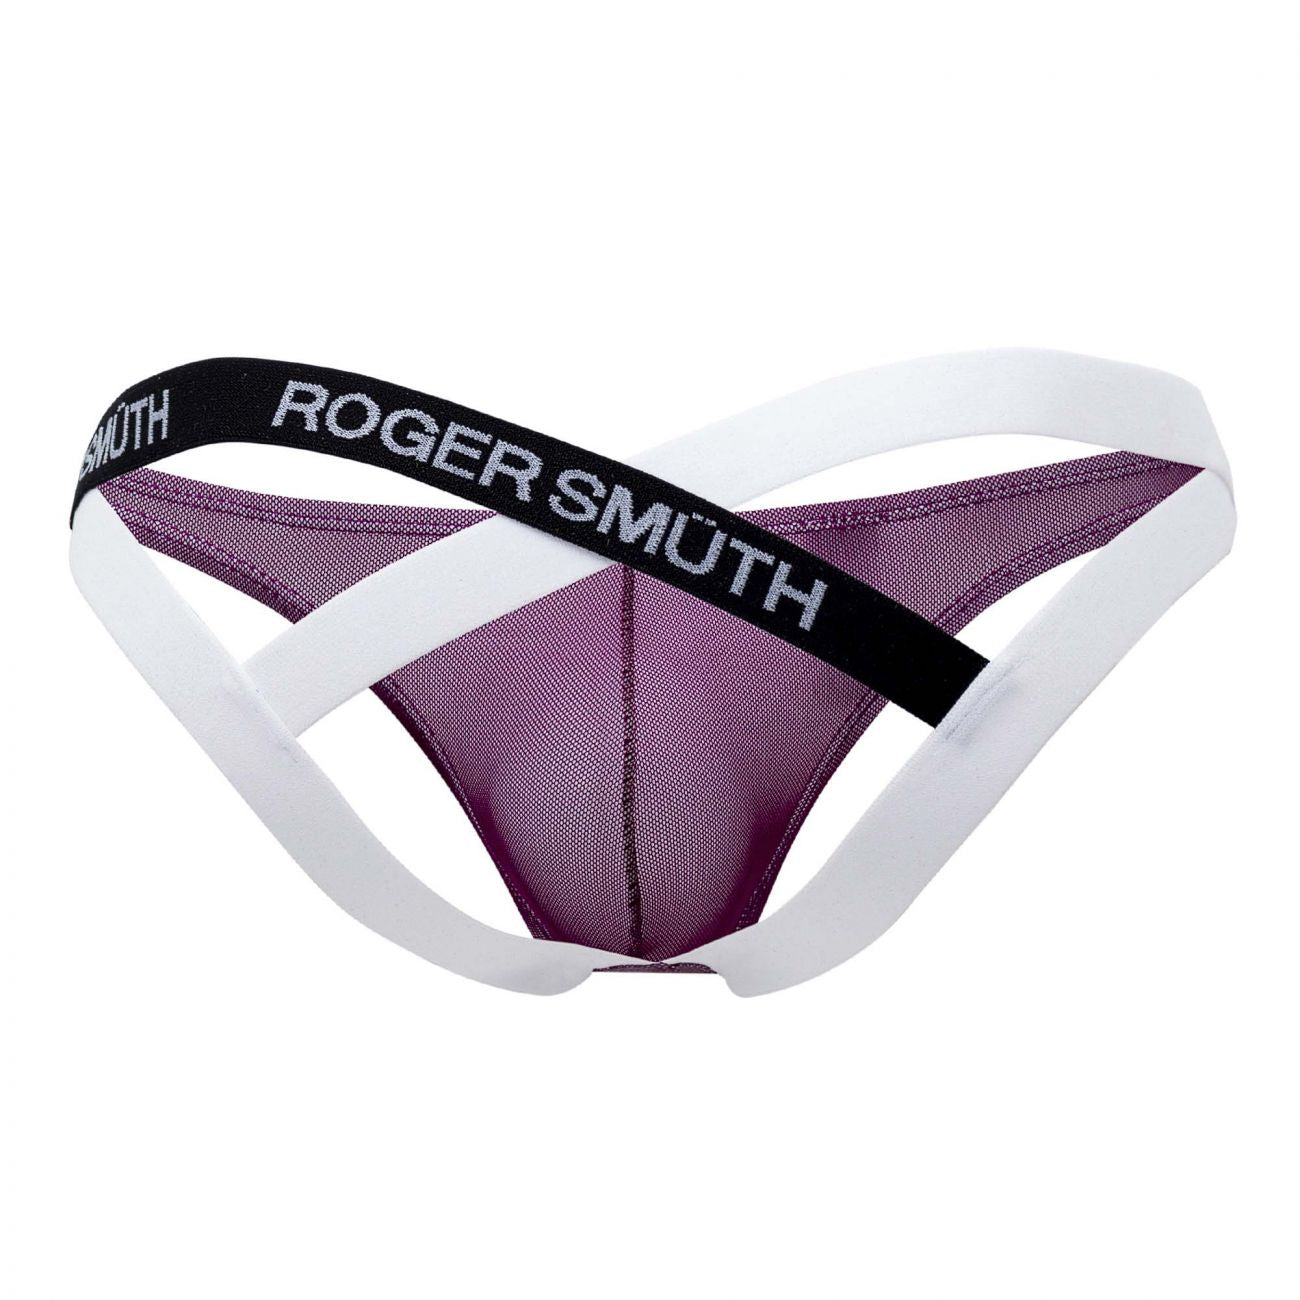 Roger Smuth RS018 Jockstrap